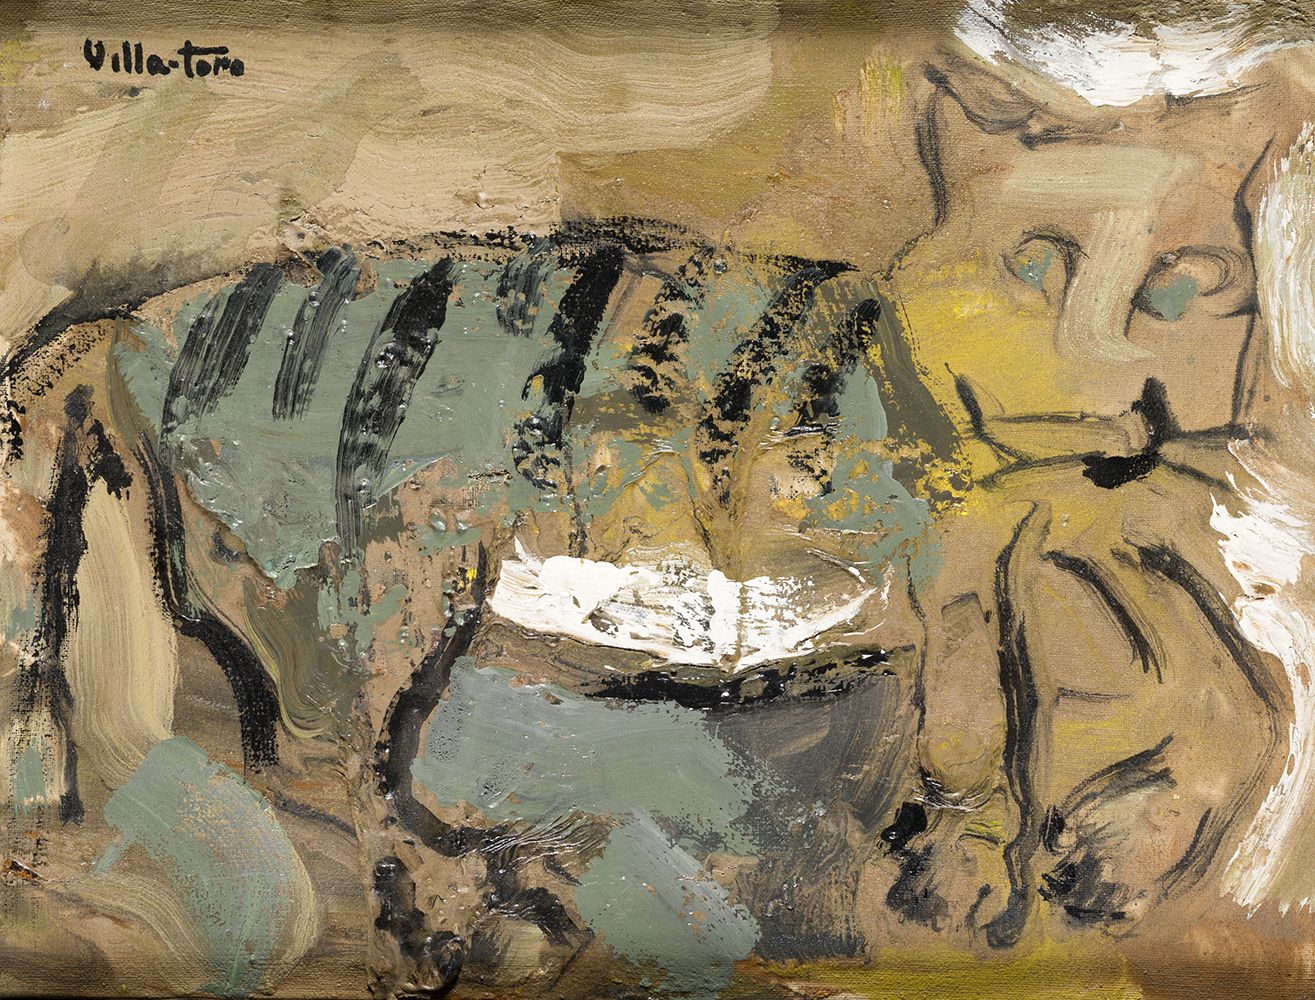 ANTONIO VILLA-TORO (1949 / .) "Feline" . 305 x 40 cm. Mischtechnik auf Leinwand